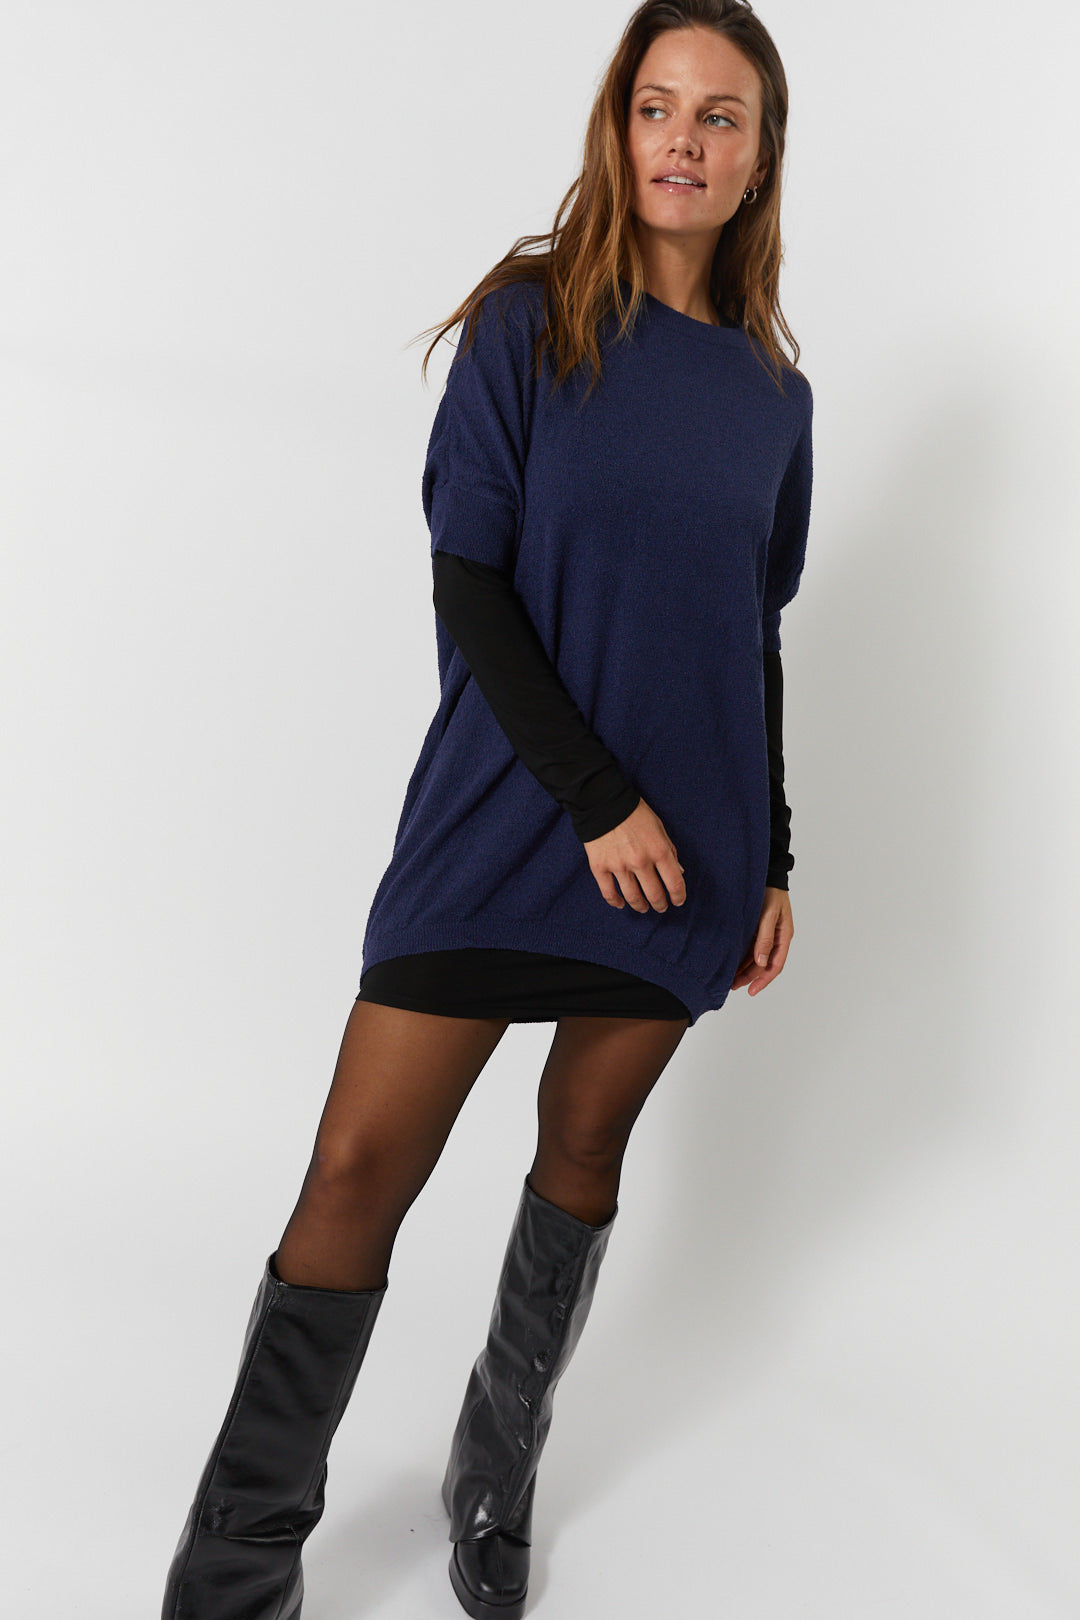 Navy blue knit sweater | Solange